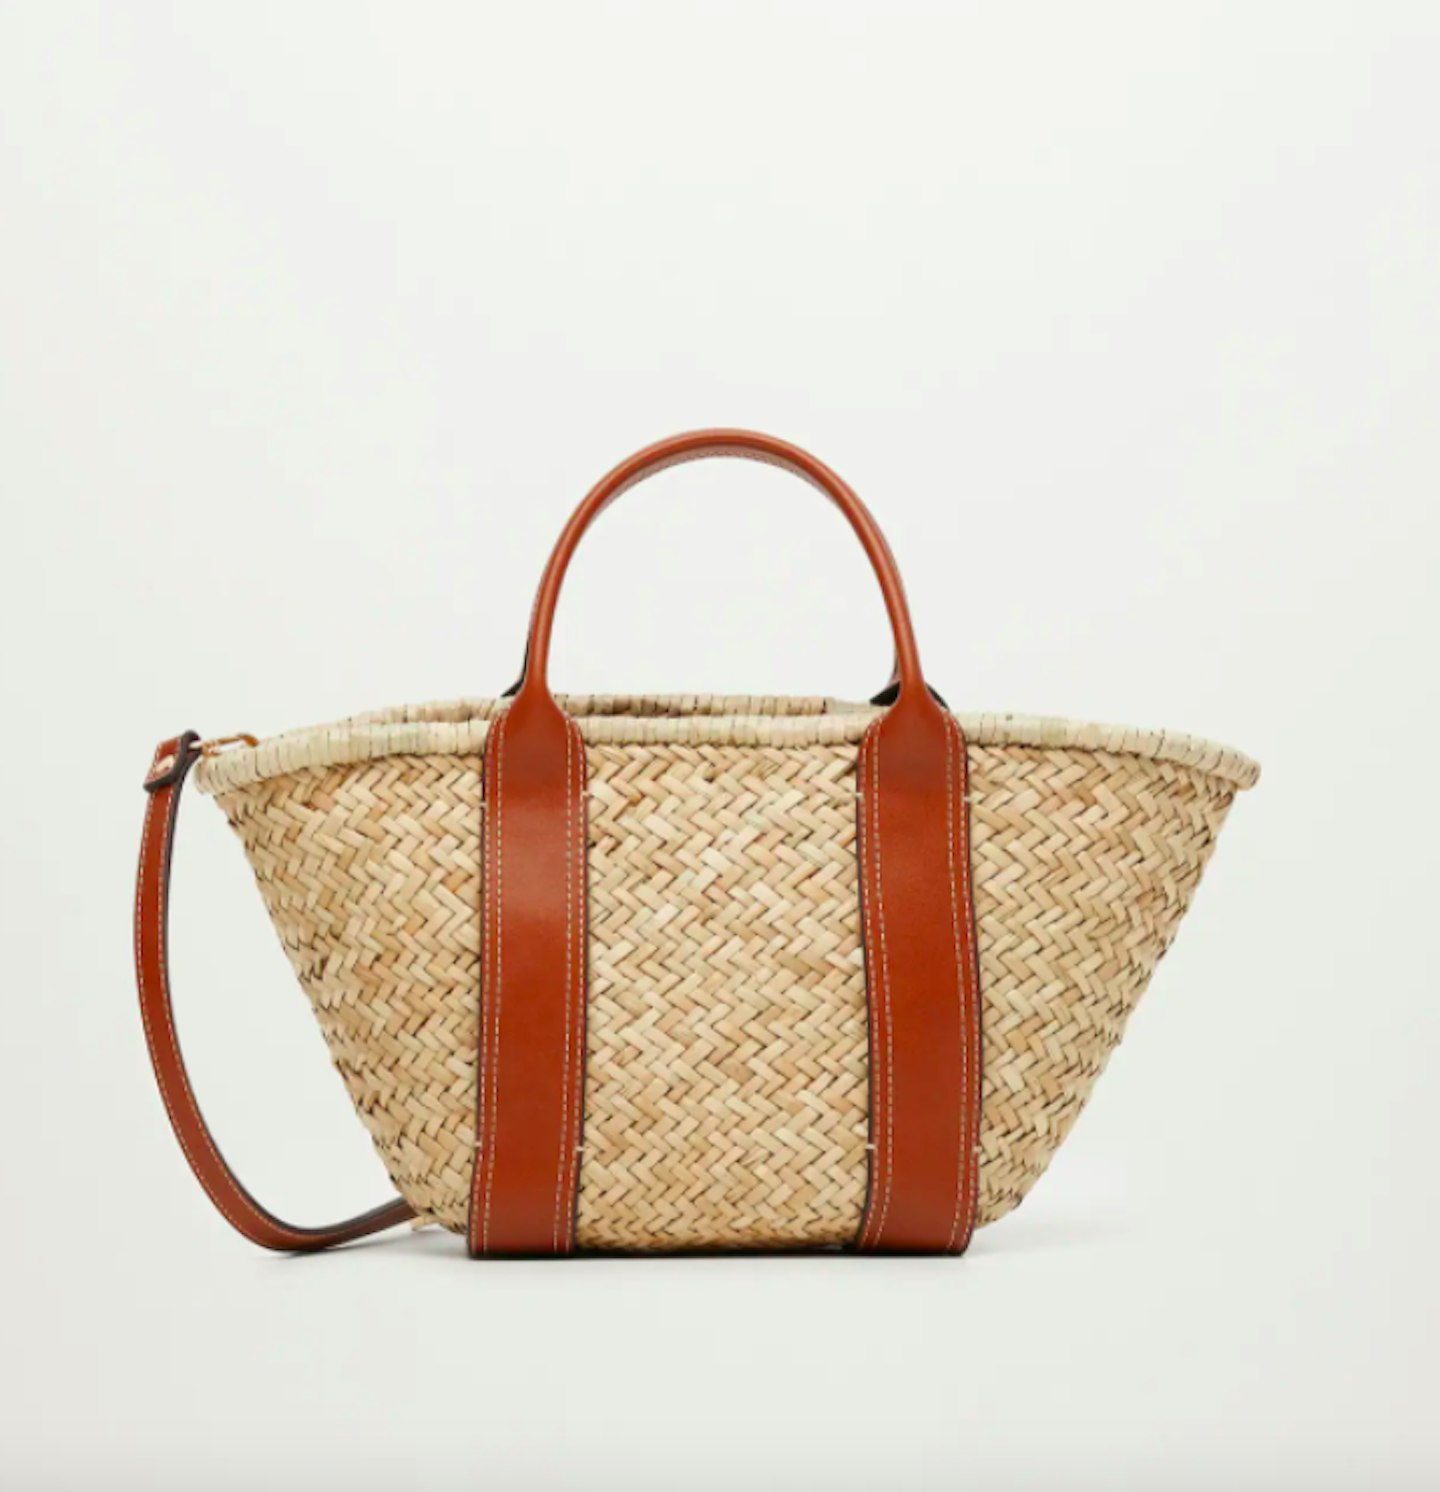 Double-Strap Basket Bag, £35.99